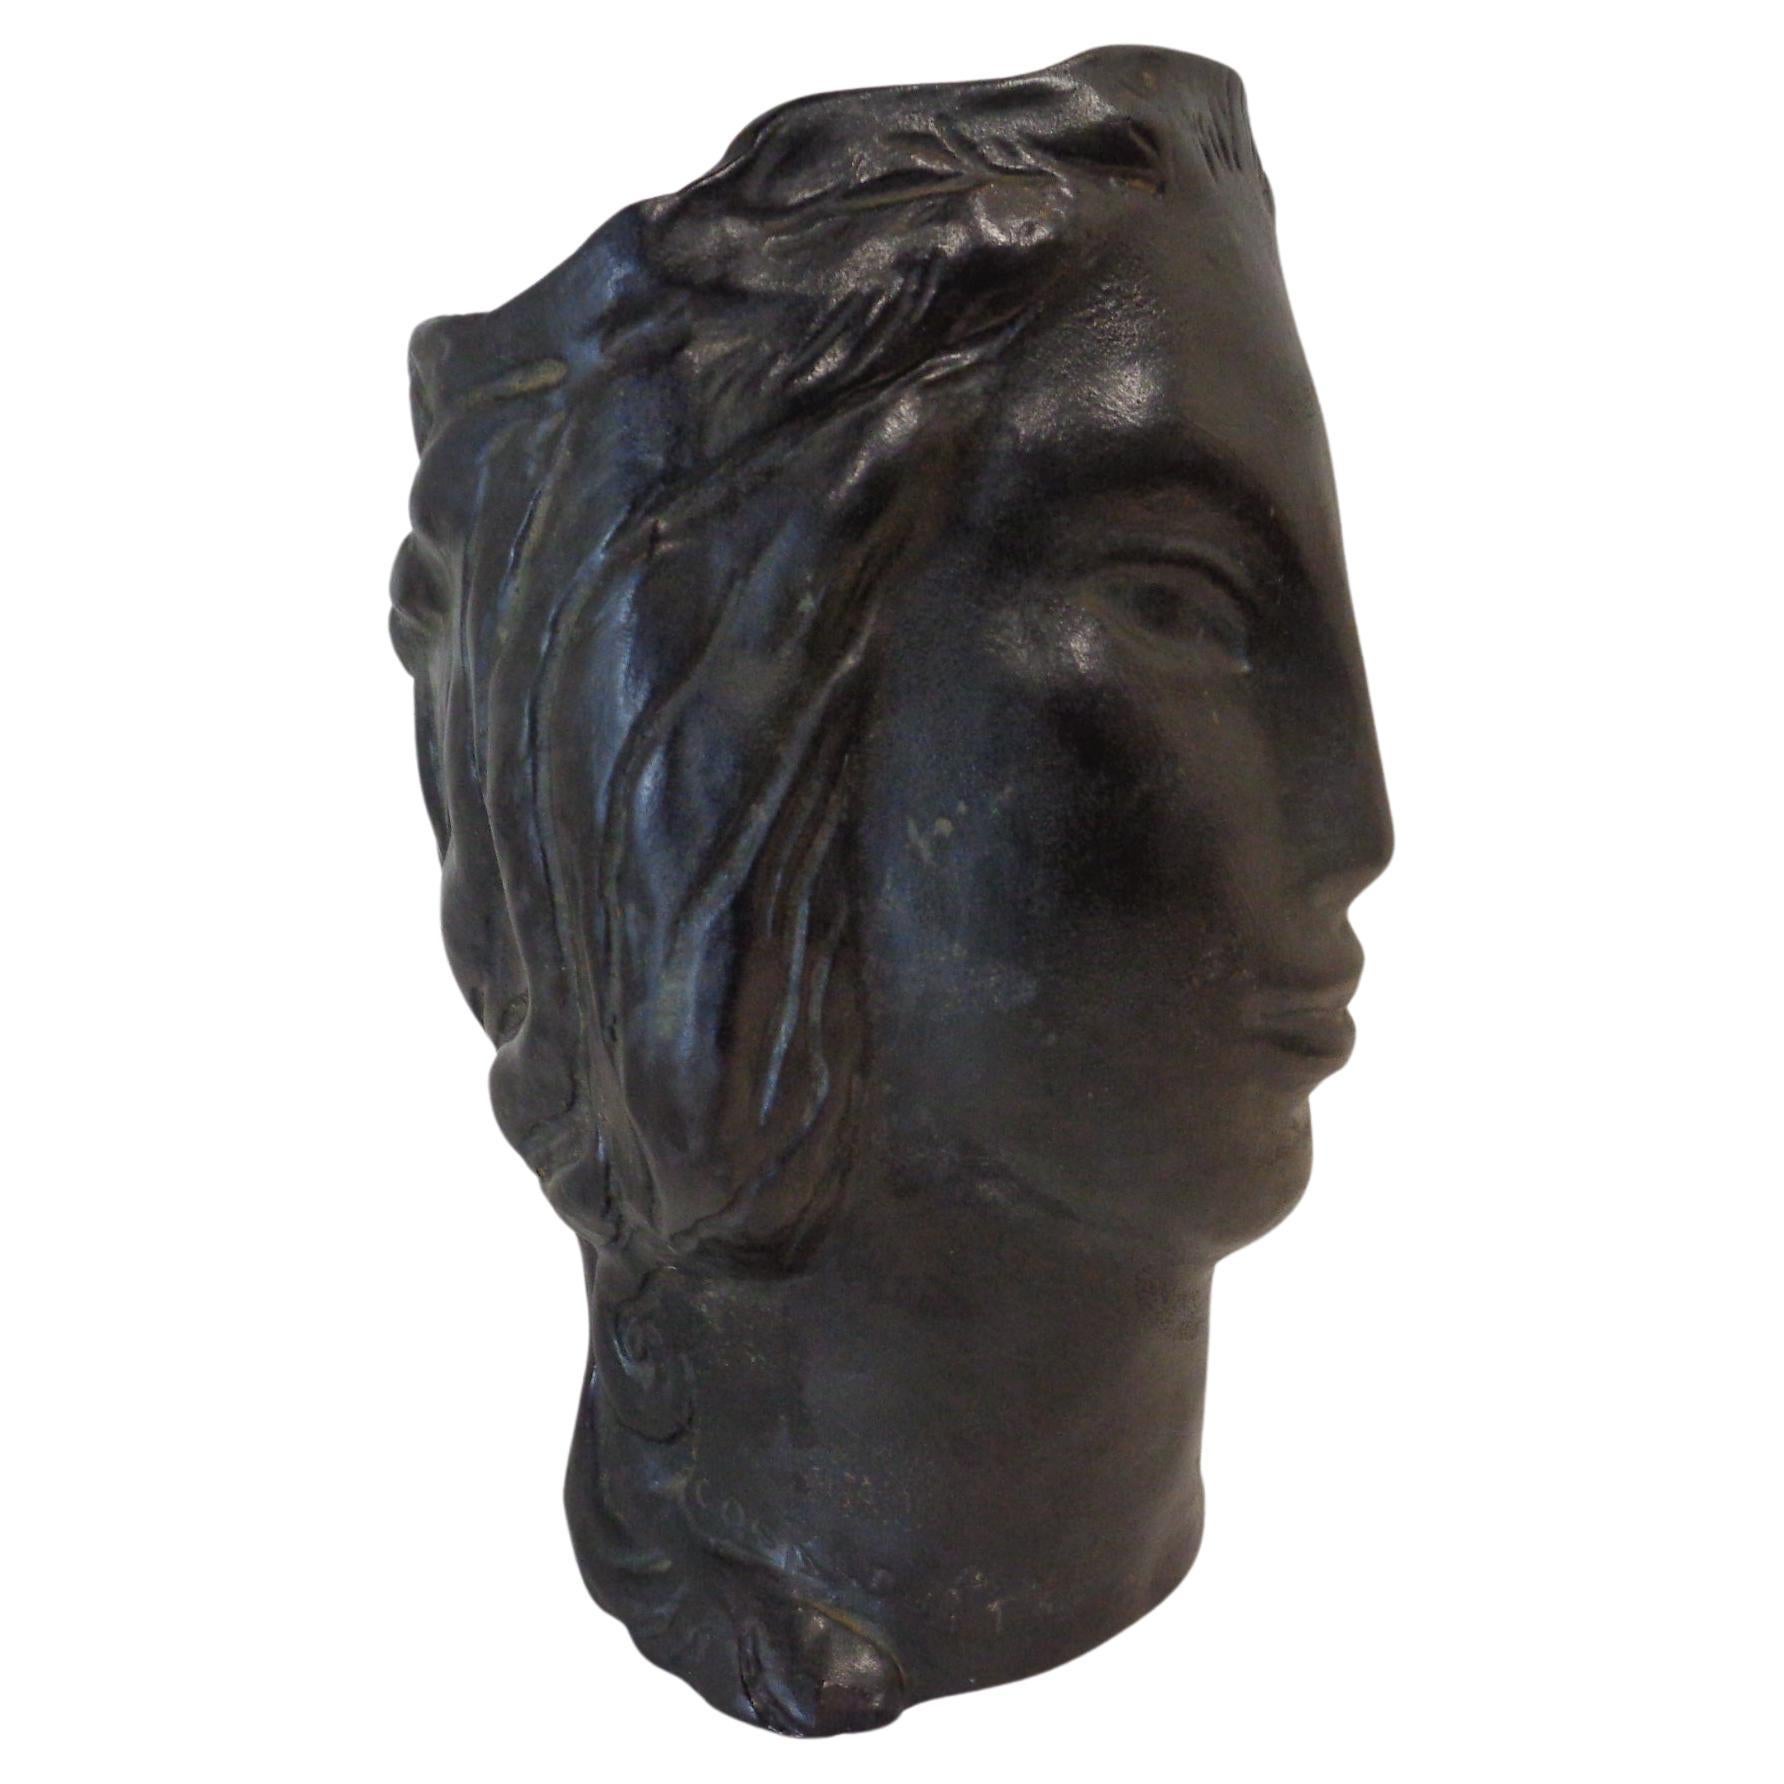   Art Deco Ceramic Exotic Head Vase Sculpture by Edith Varian Cockcroft 3